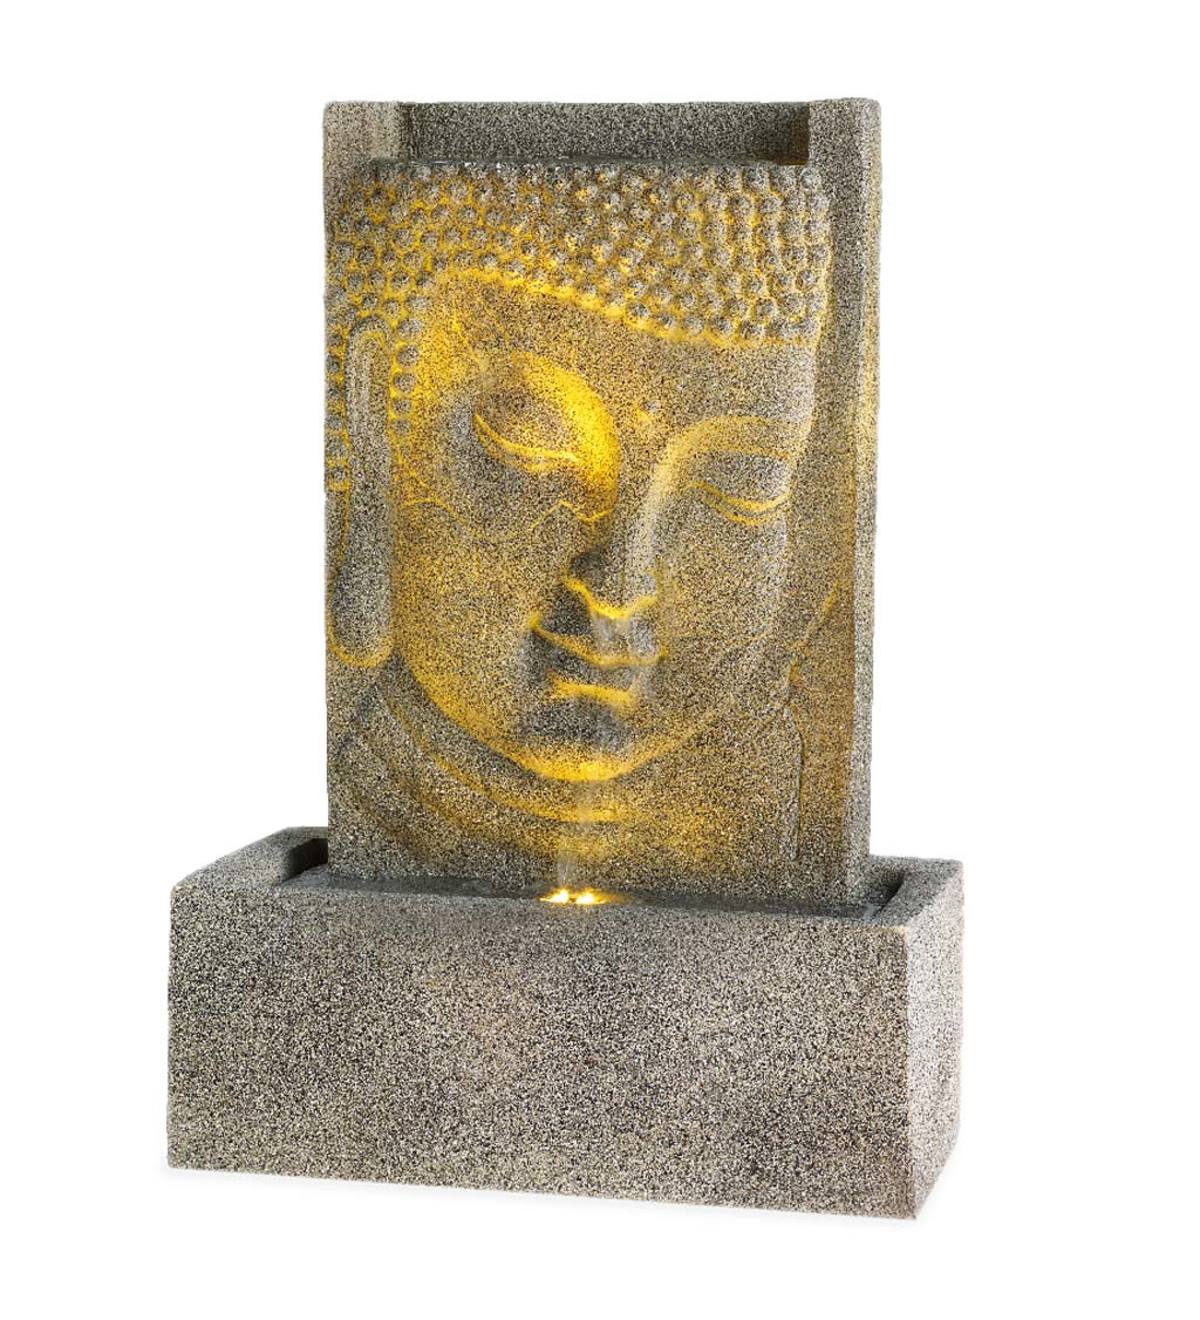 Lighted Buddha Face Fountain